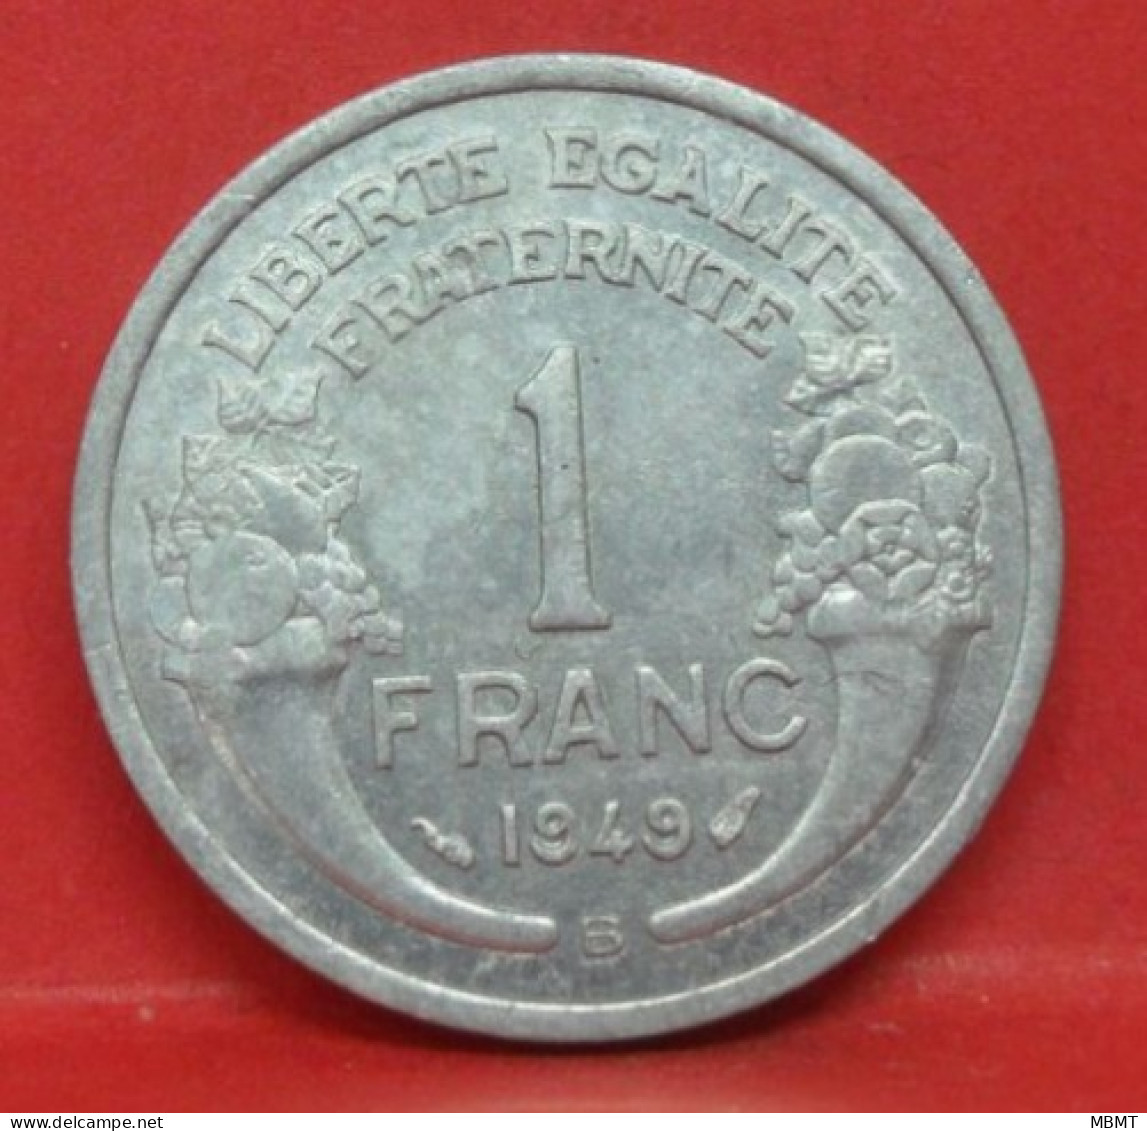 1 Franc Morlon Alu 1949 B - SUP - Pièce Monnaie France - Article N°679 - 1 Franc